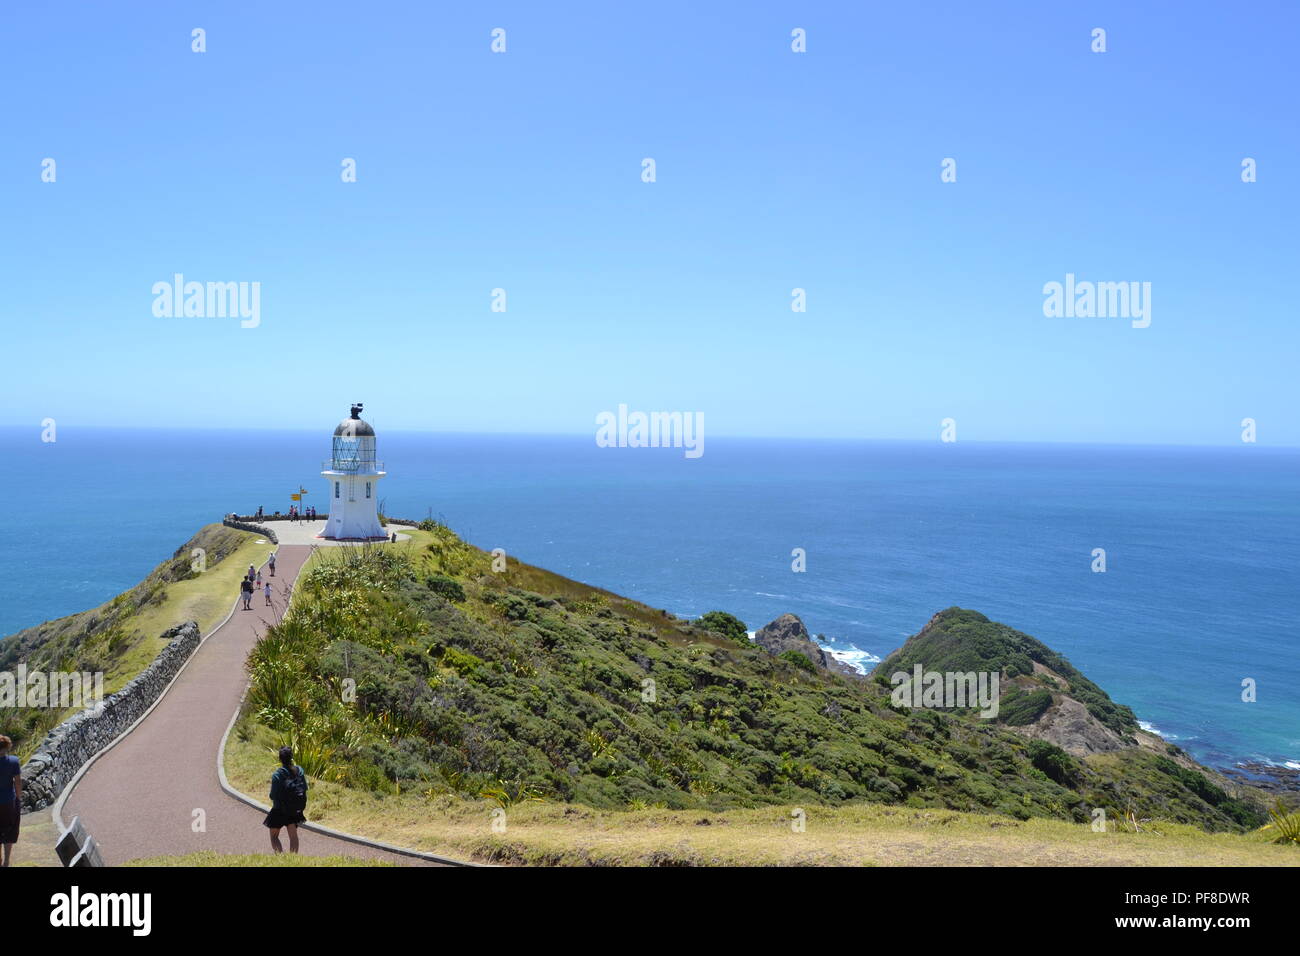 Cape reinga lighthouse front of the sea, small lighthouse norht island new zealand Stock Photo